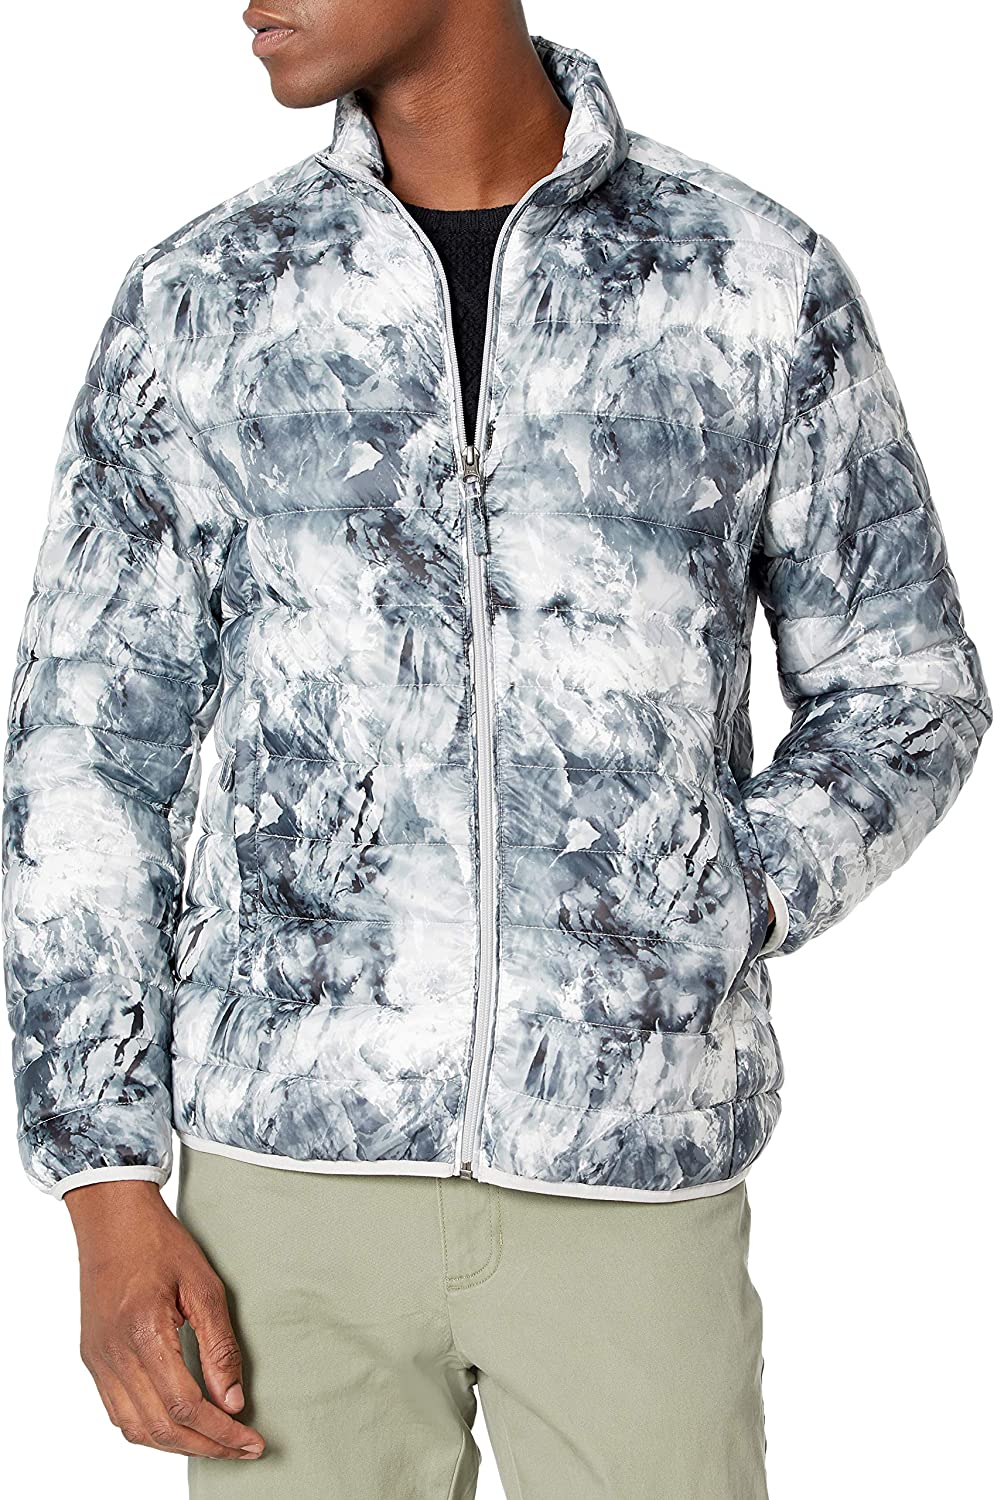 Men's Packable Lightweight Water-Resistant Puffer Jacket - Marble